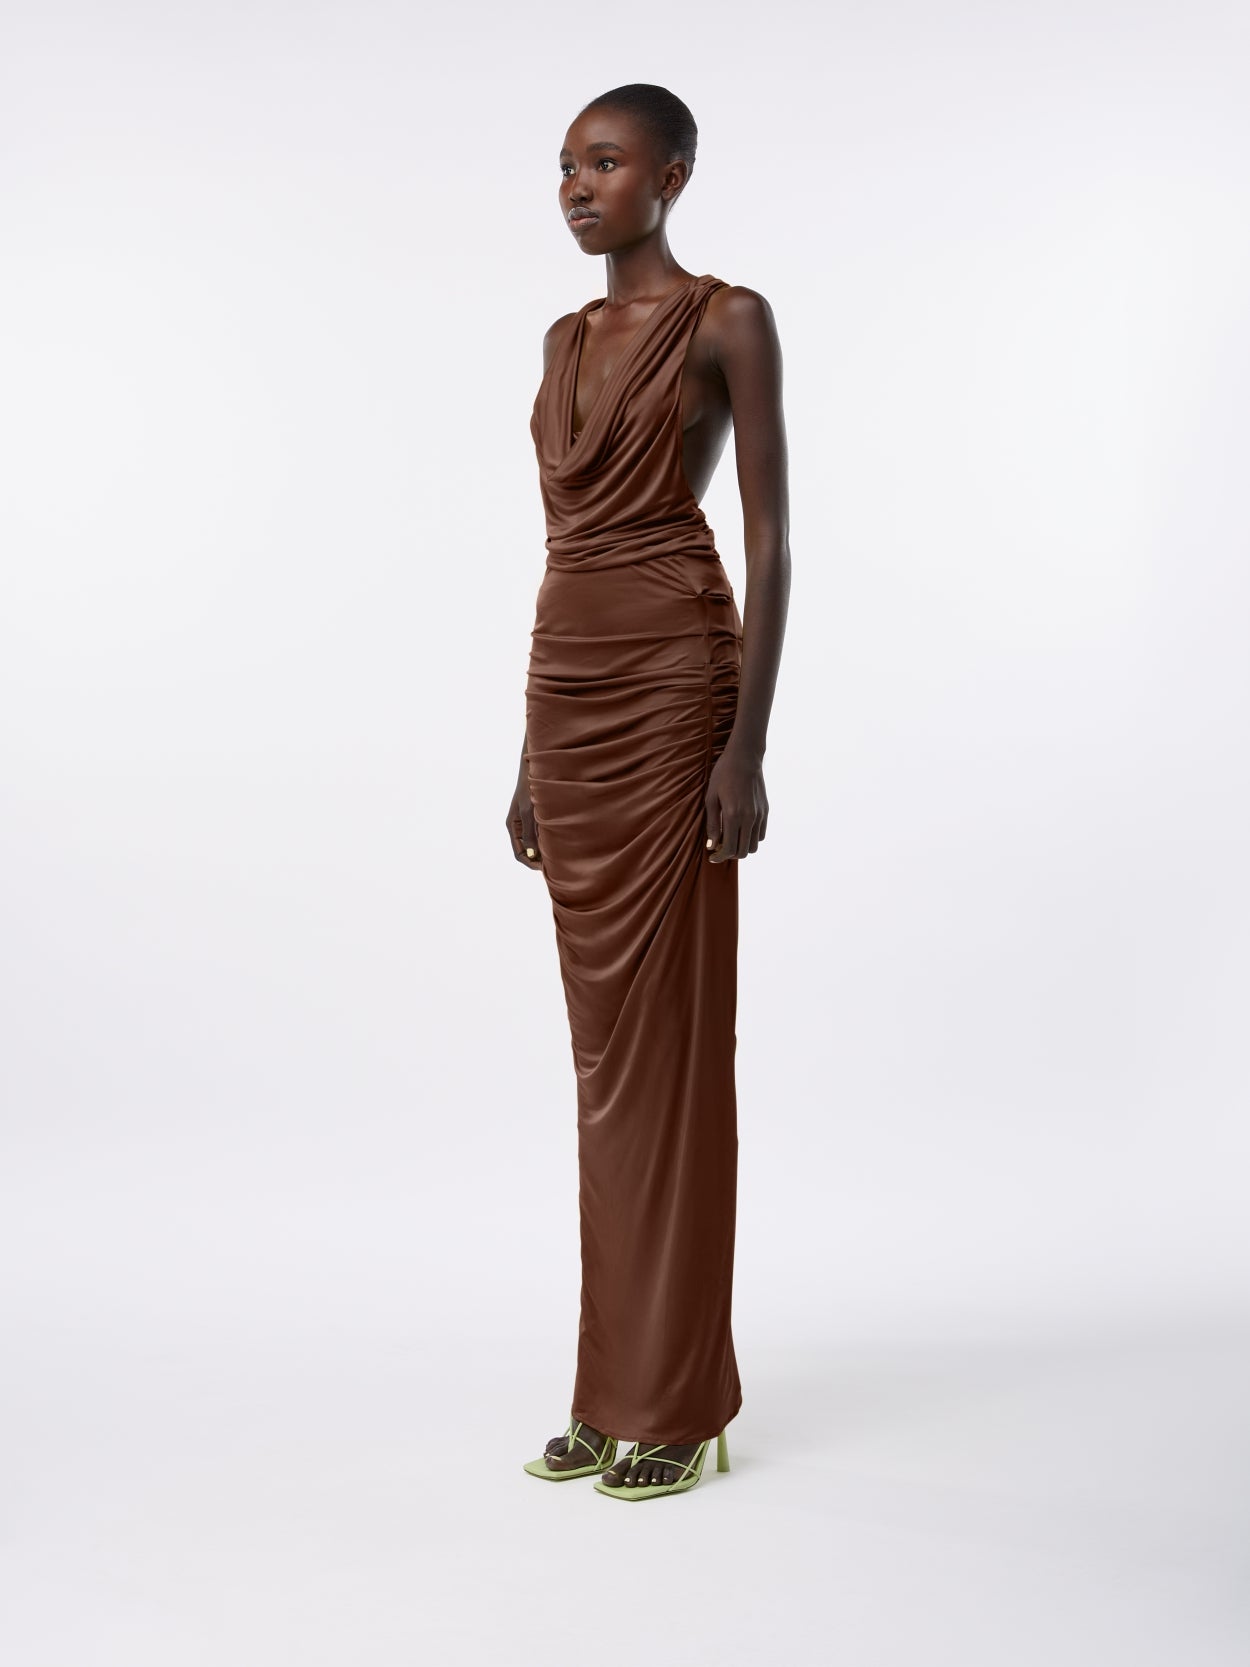 model wearing a brown long draped jersey dress